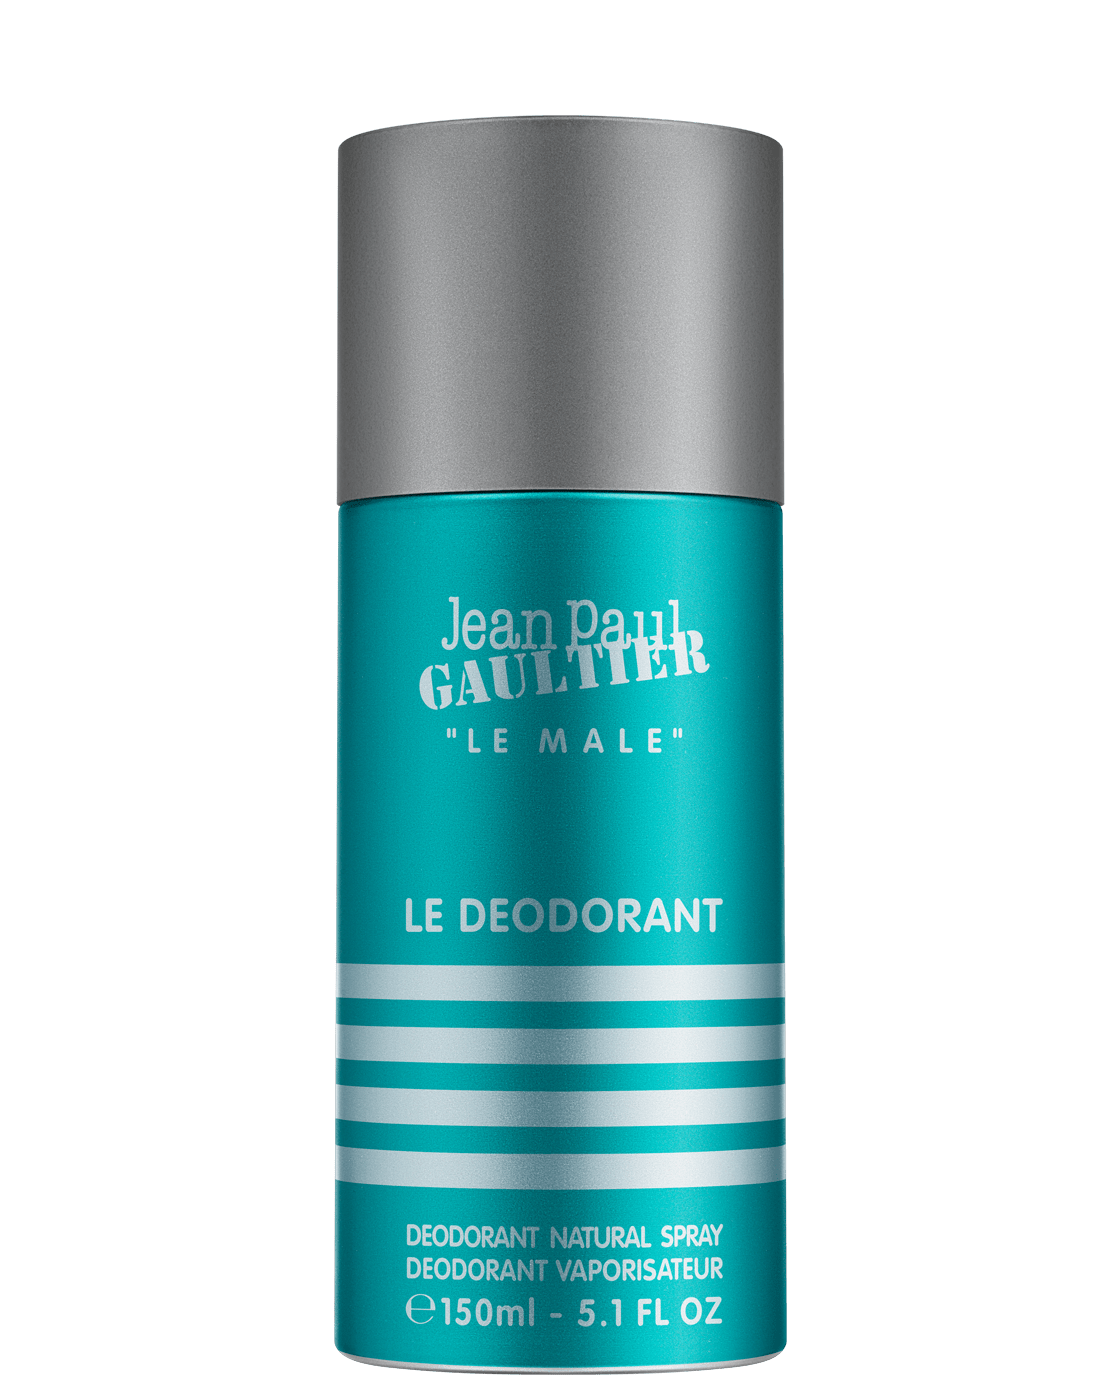 Jean Paul Gaultier Ultra Male New Version Review 